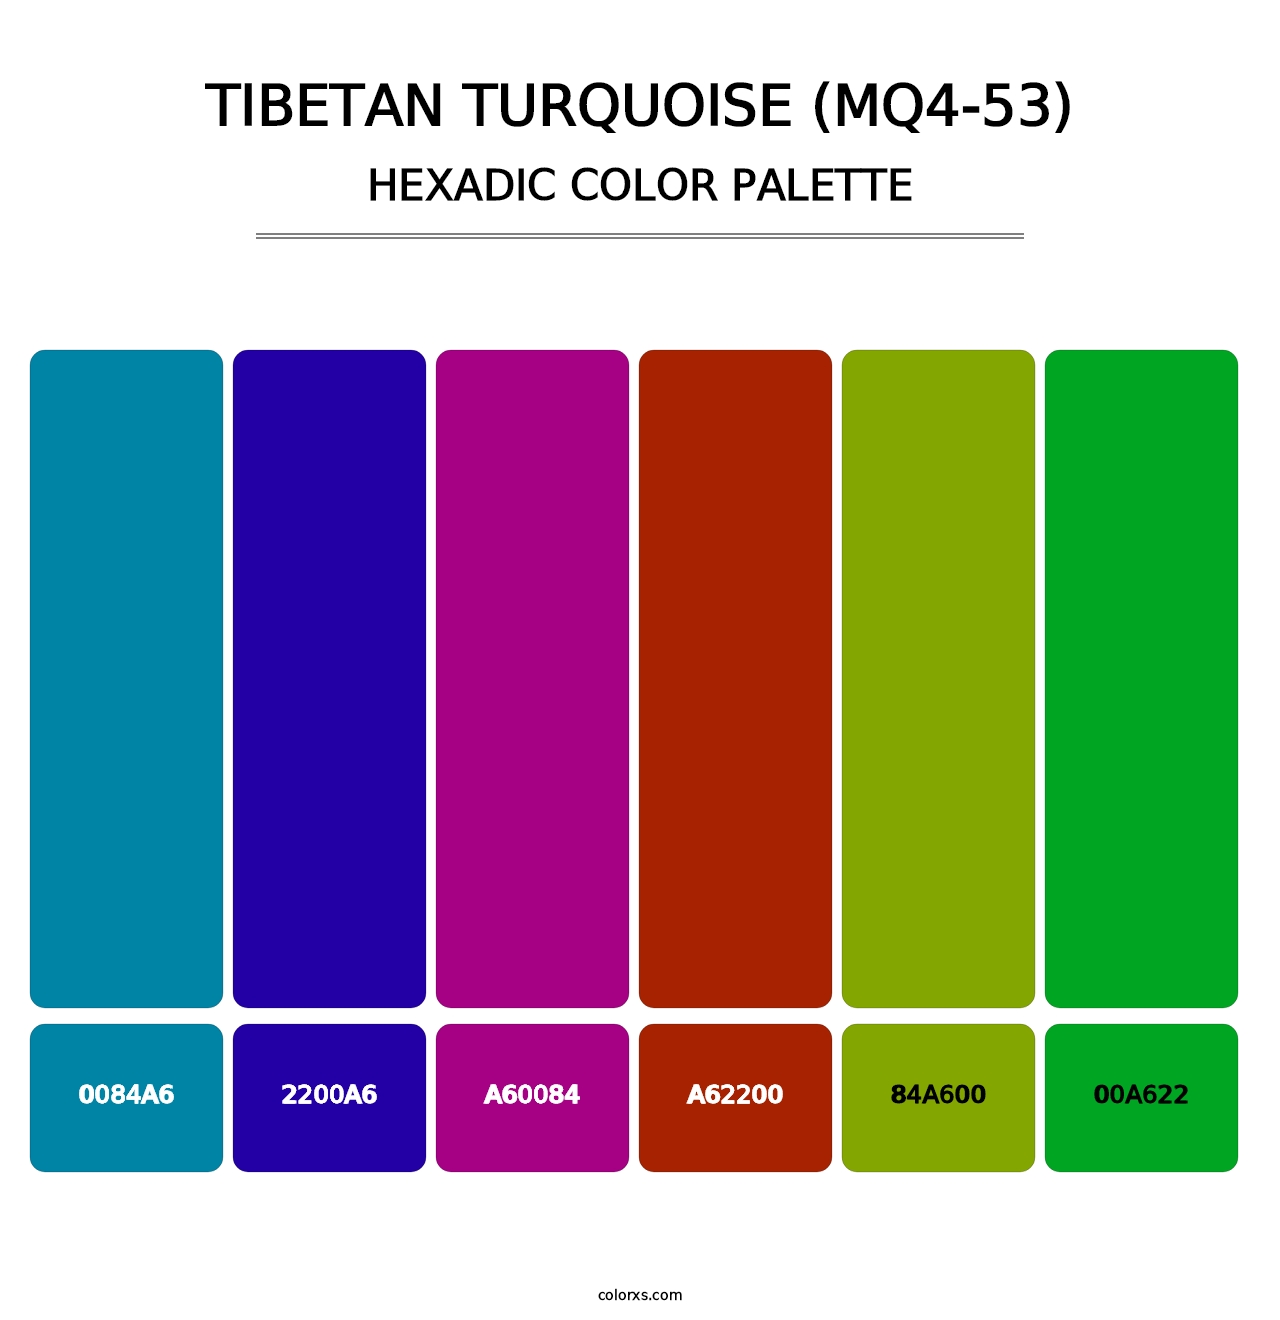 Tibetan Turquoise (MQ4-53) - Hexadic Color Palette